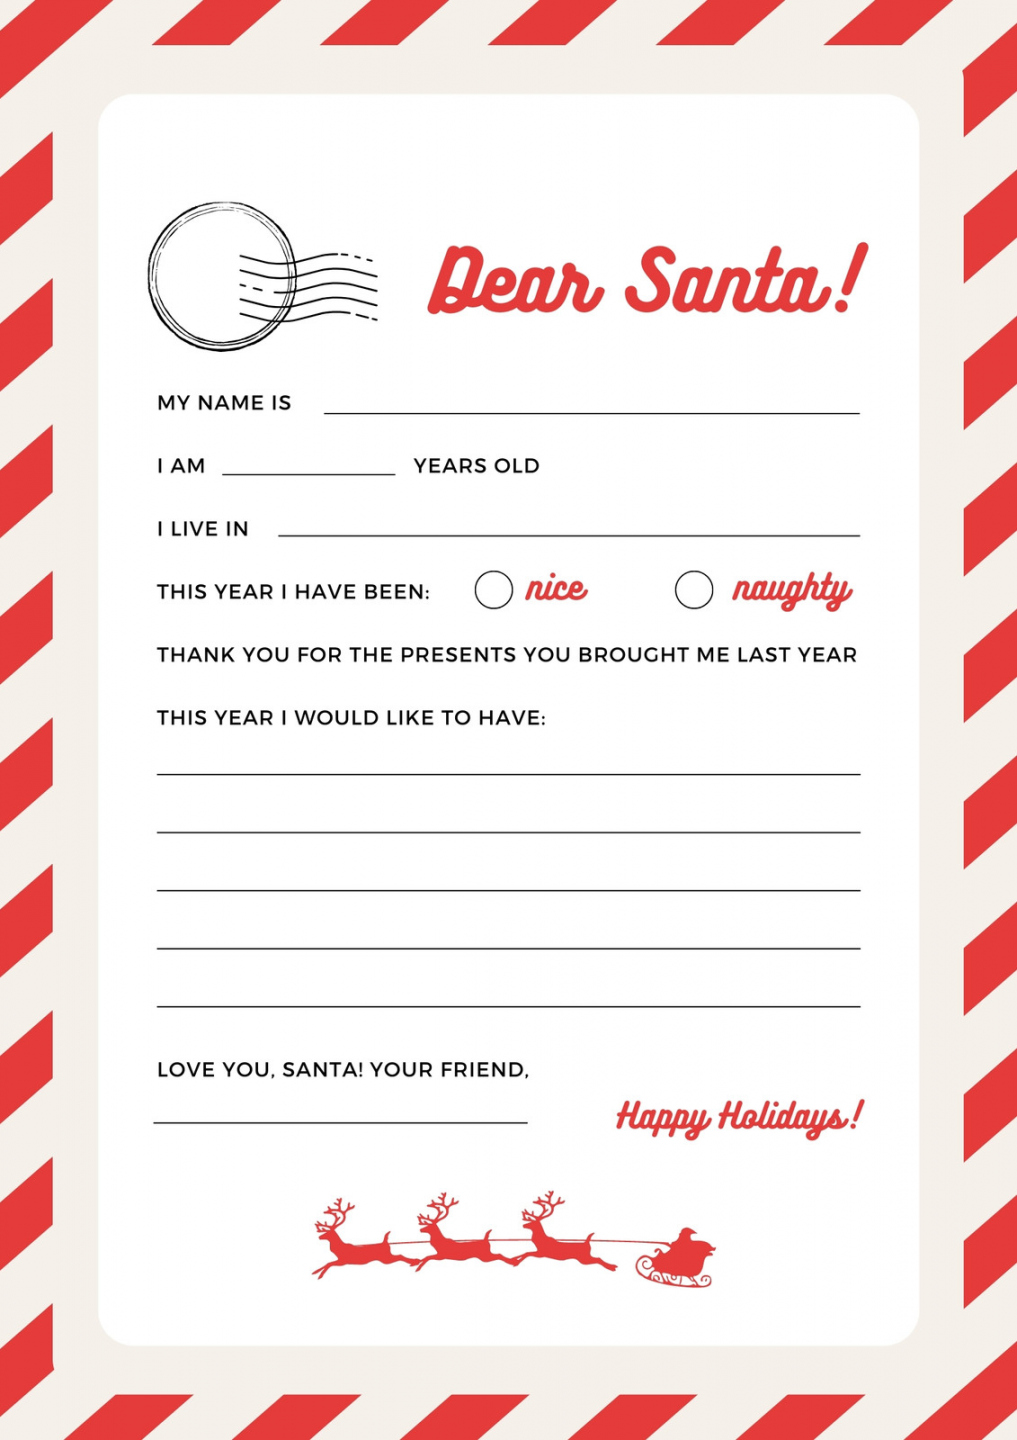 Free Printable Santa Letters - Printable - Free printable Santa letter templates you can customize  Canva